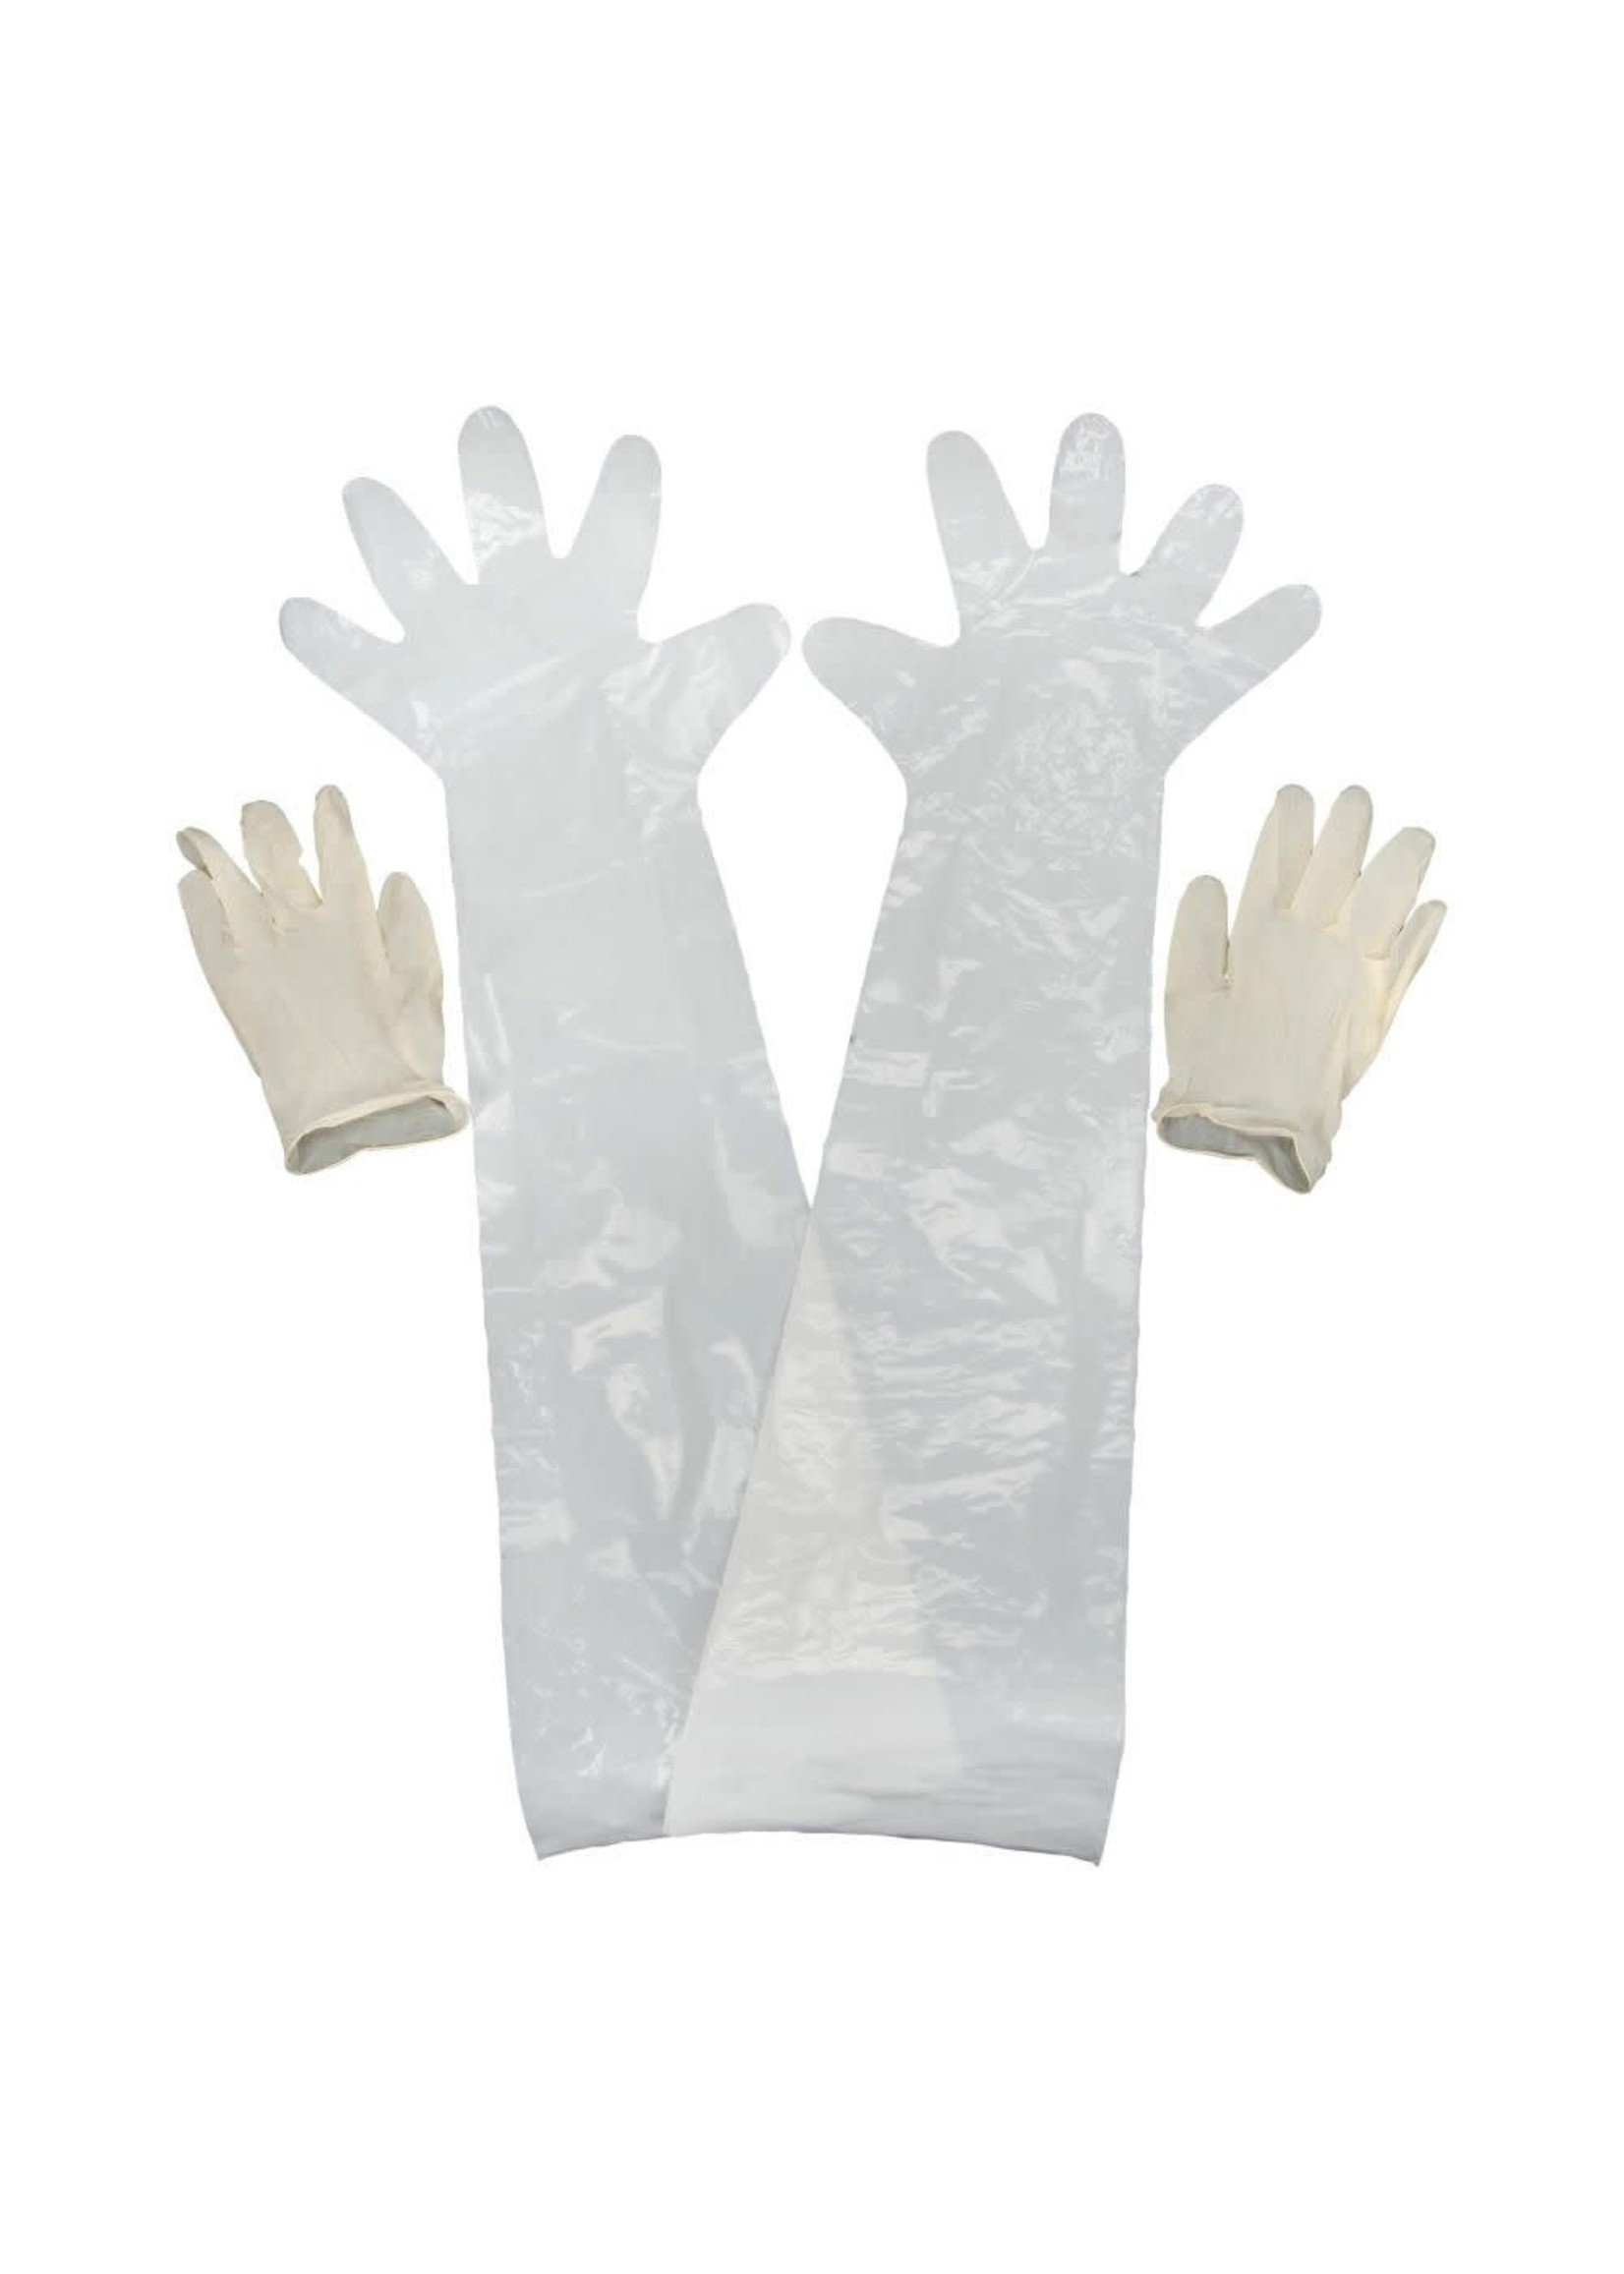 Allen field dressing gloves, 1 pair wrist length, 1 pair shoulder length